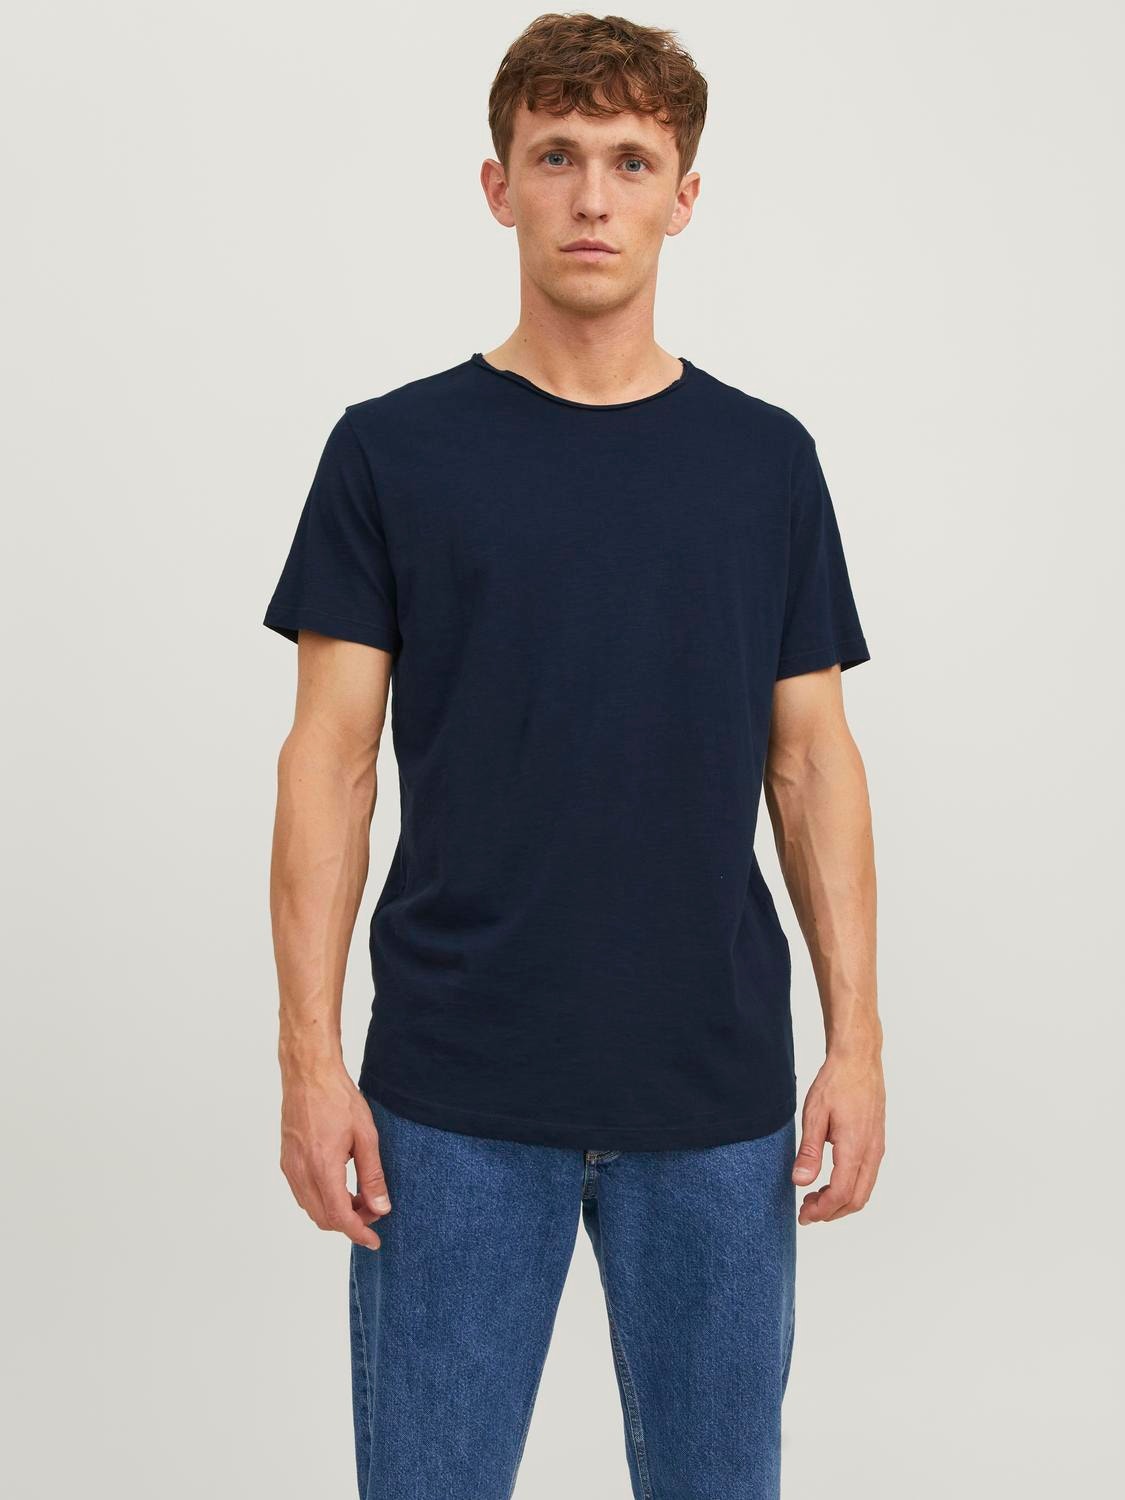 Jack & Jones T-shirt Uni Col rond -Navy Blazer - 12182498